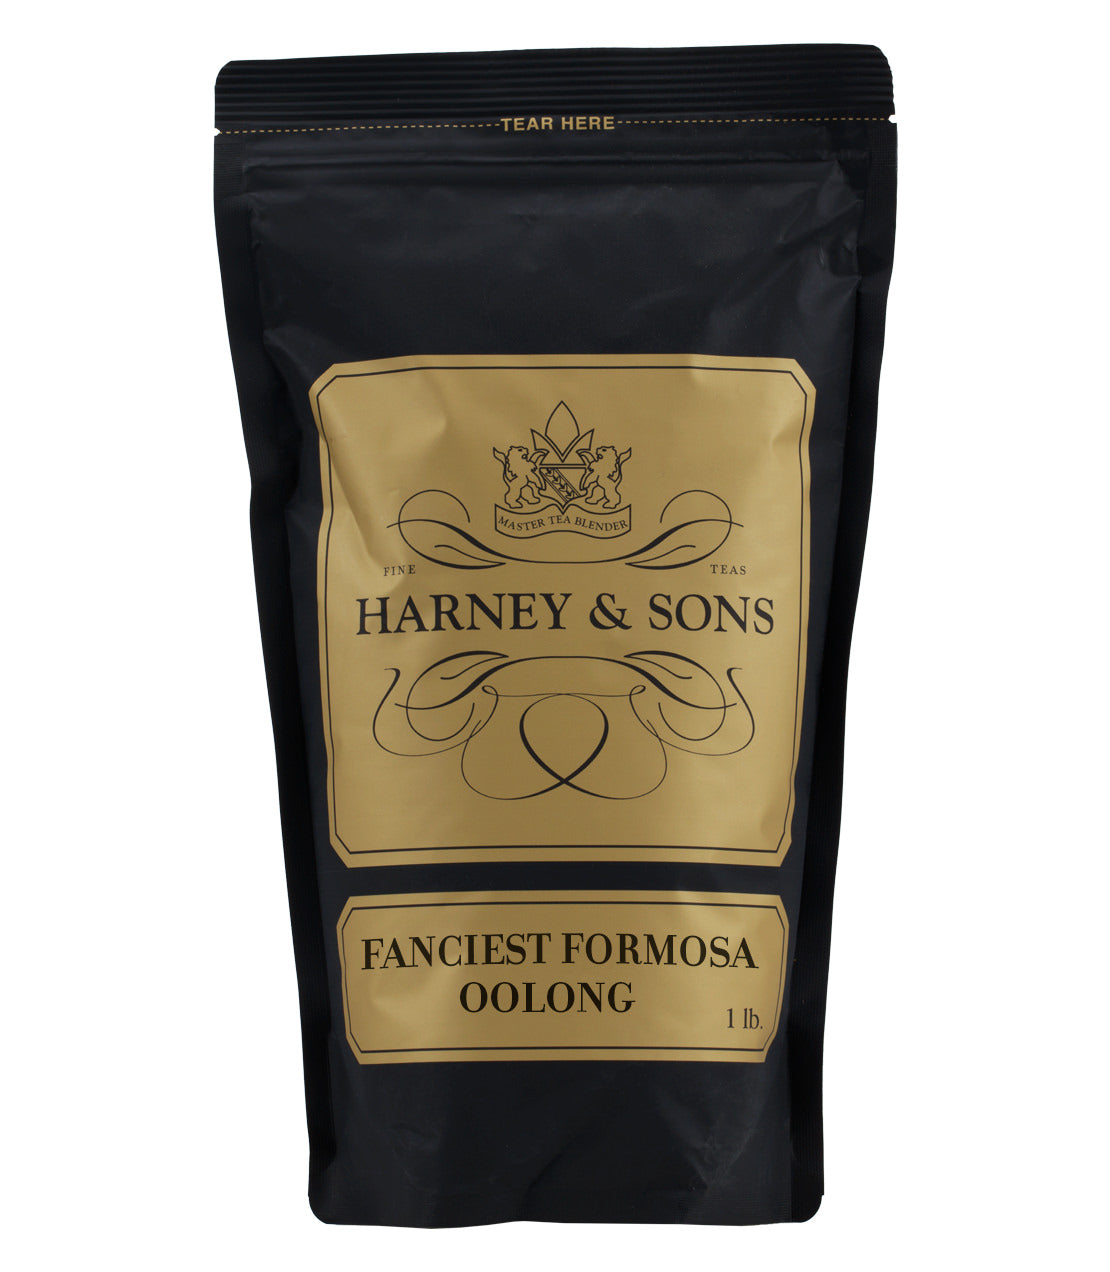 Fanciest Formosa Oolong - Loose 1 lb. Bag - Harney & Sons Fine Teas